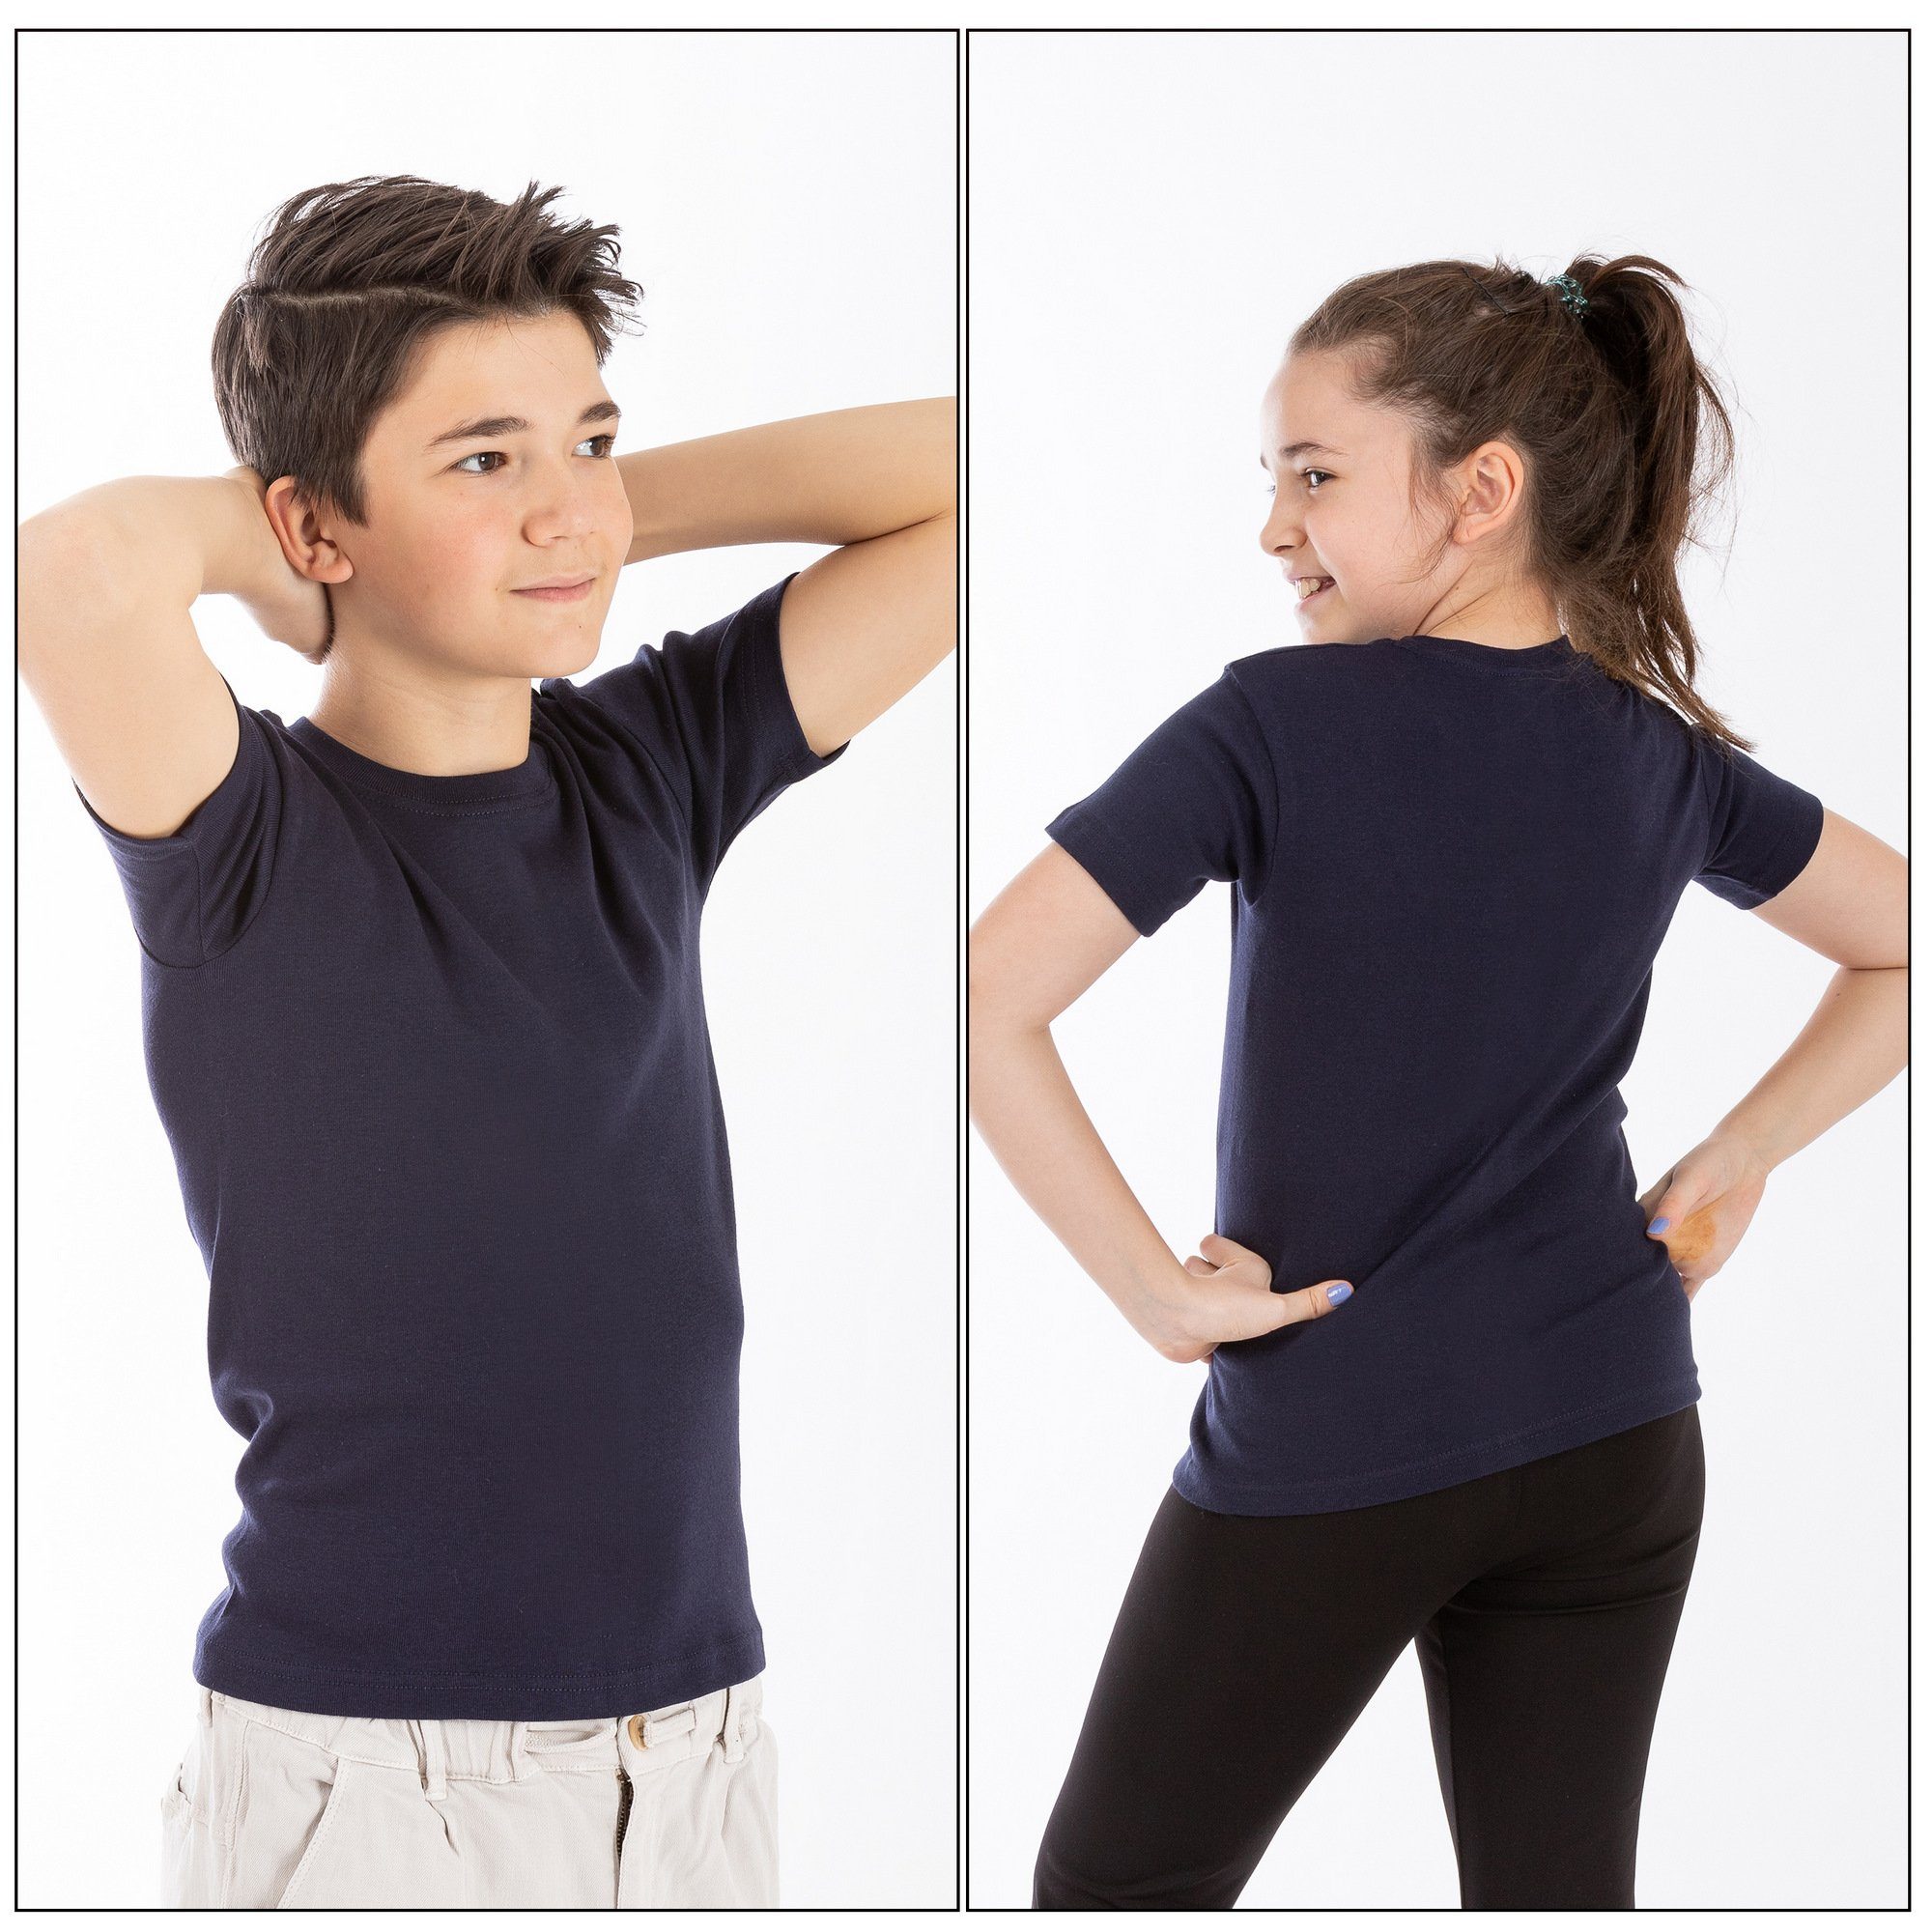 Mädchen Unterhemd Kurzarm 5-St) Dunkelblau 100% 5 T-Shirt Unterhemd (Spar-Packung, Shirt LOREZA & Baumwolle - Jungen